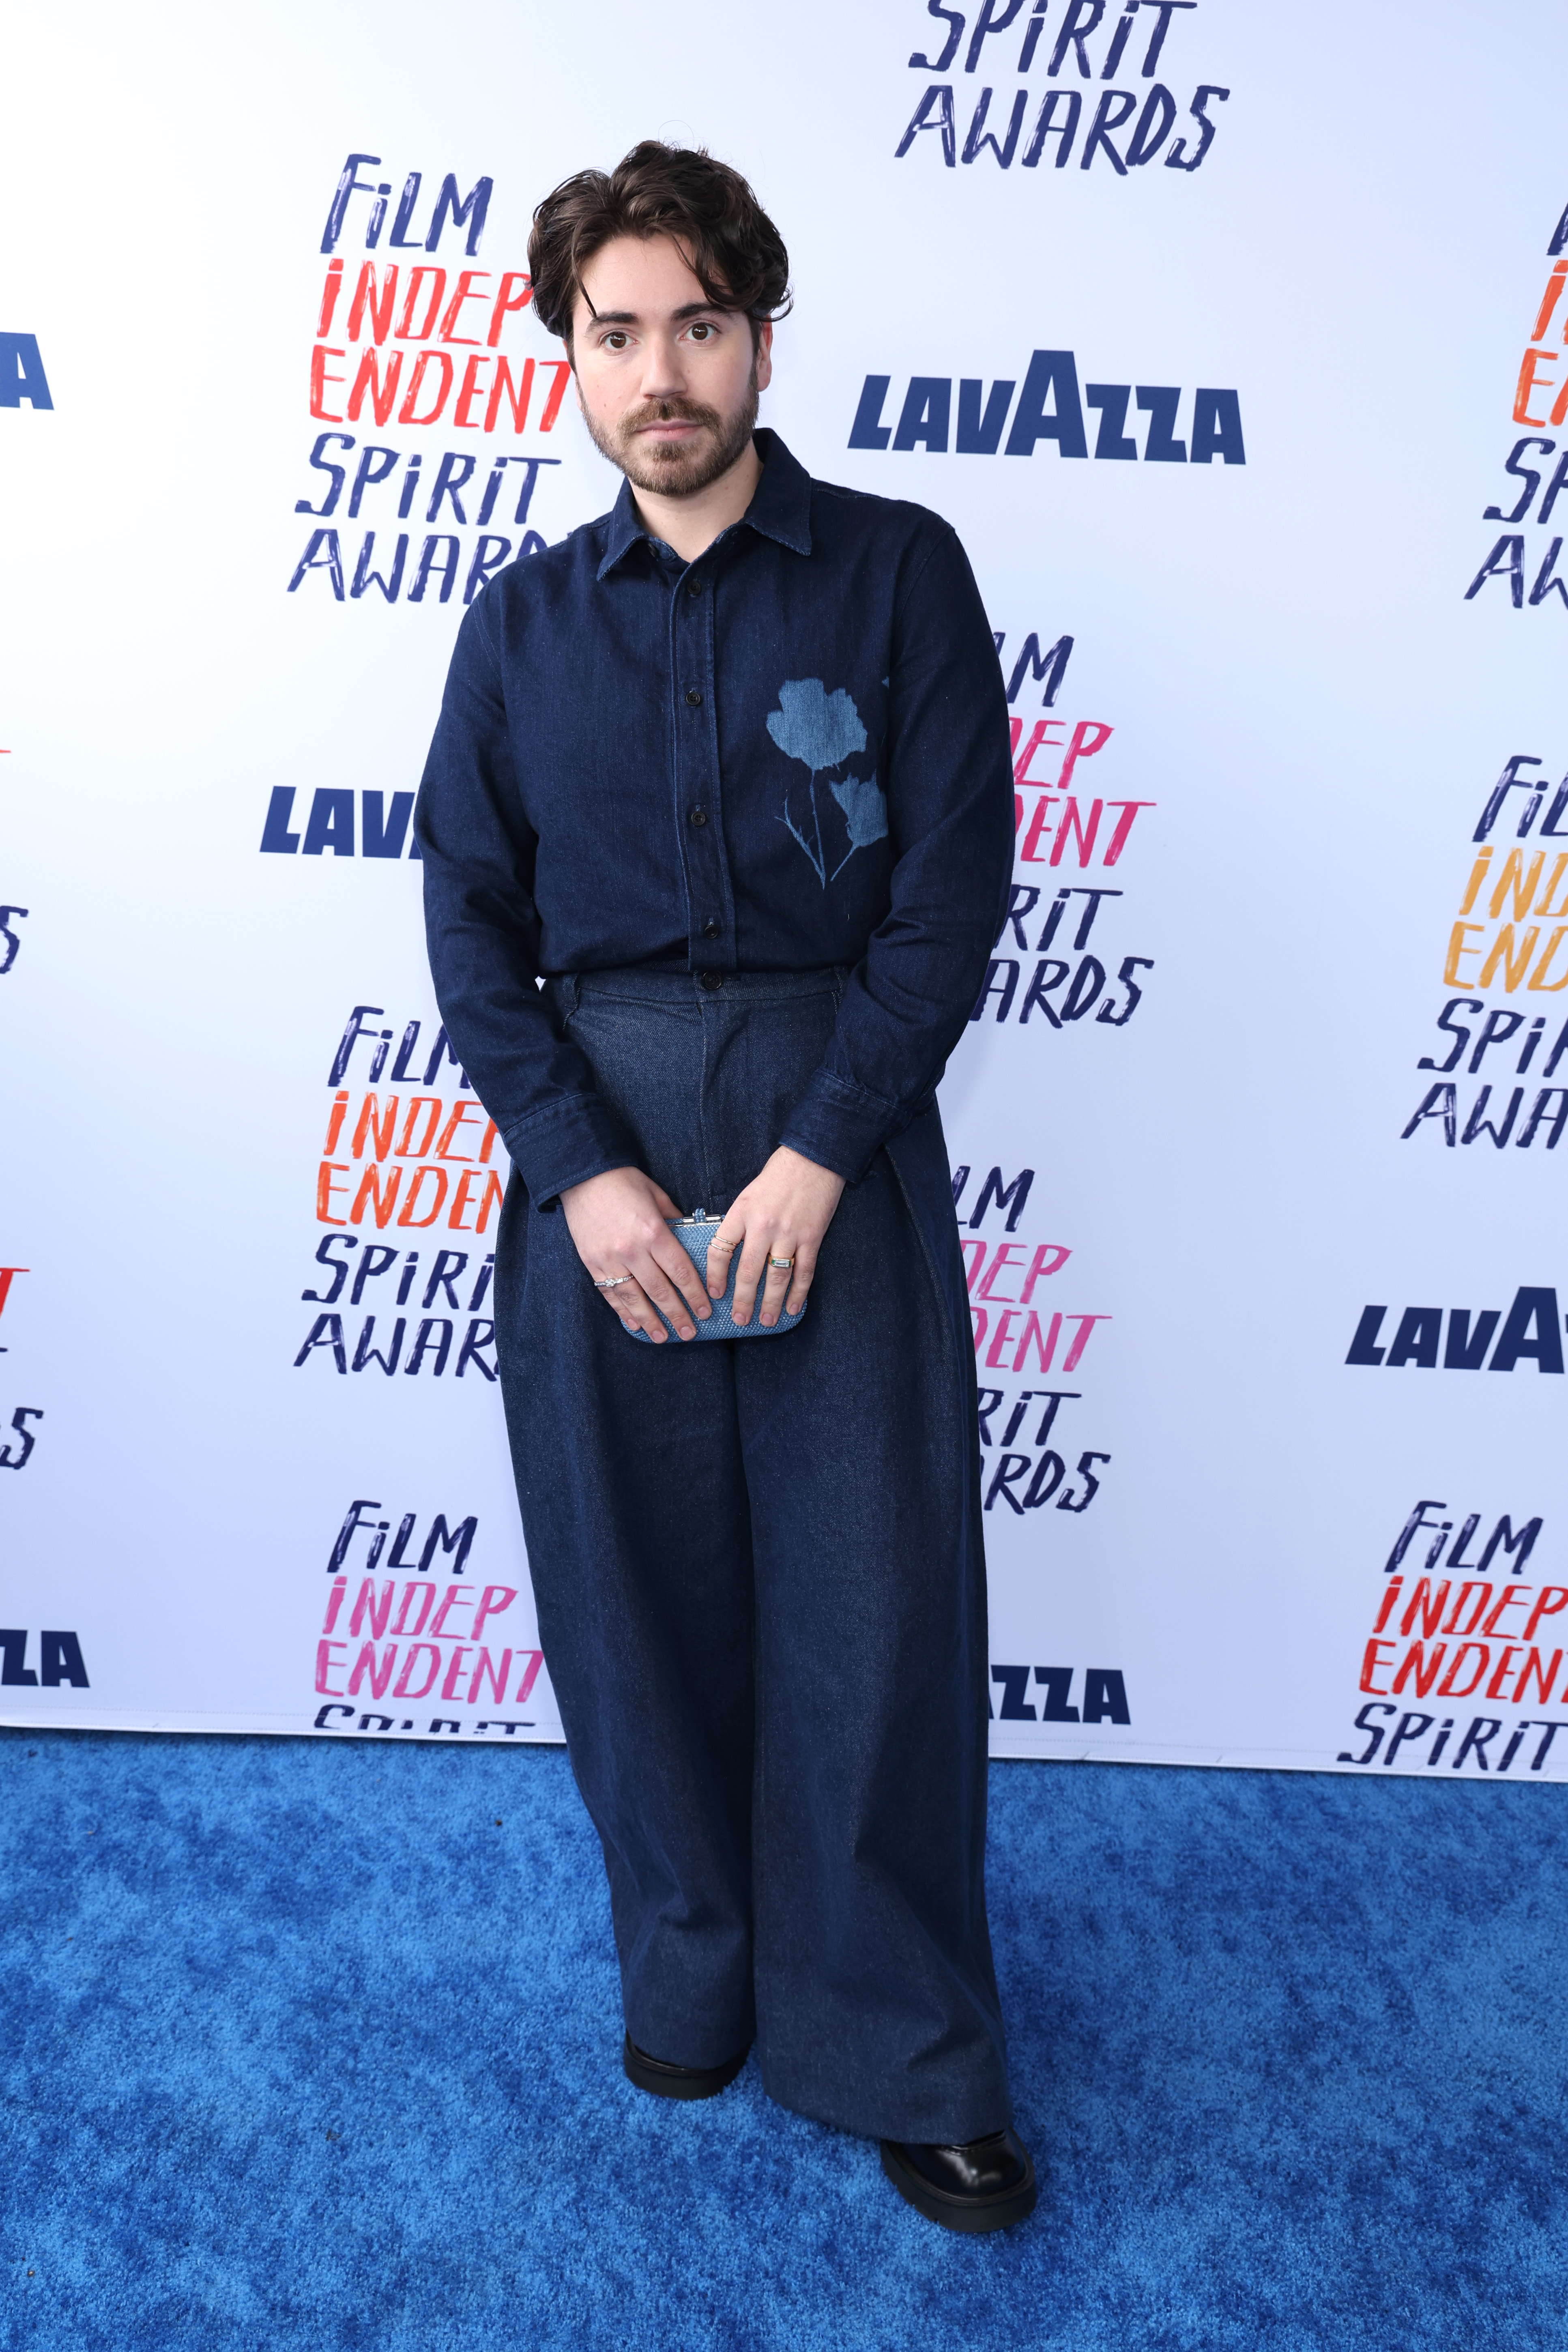 Noah in denim suit with flower detail posing at Film Independent Spirit Awards